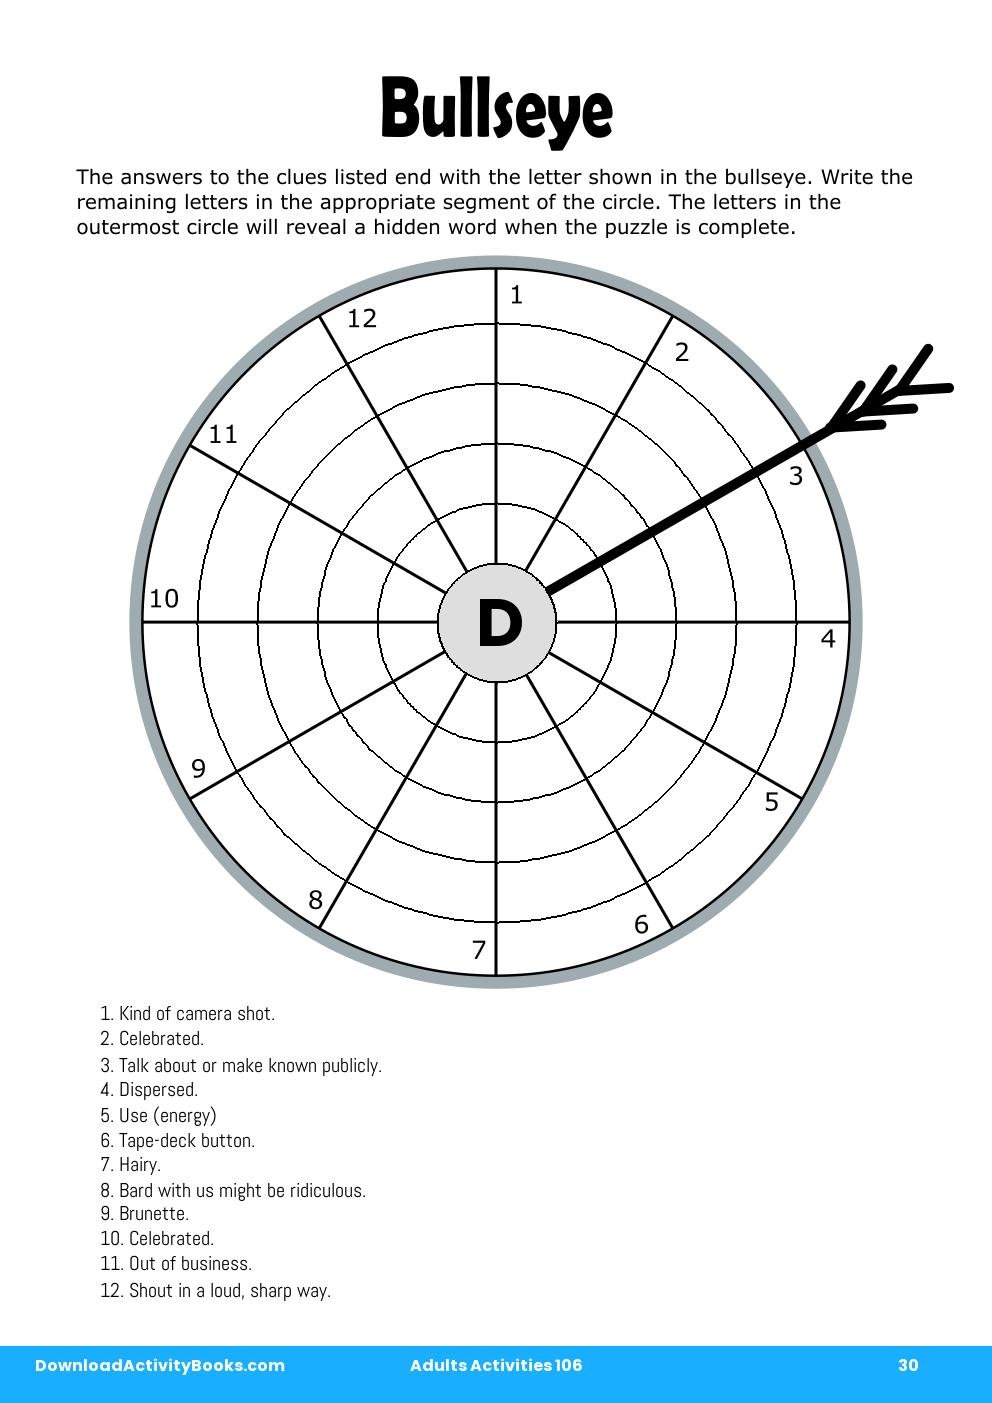 Bullseye in Adults Activities 106